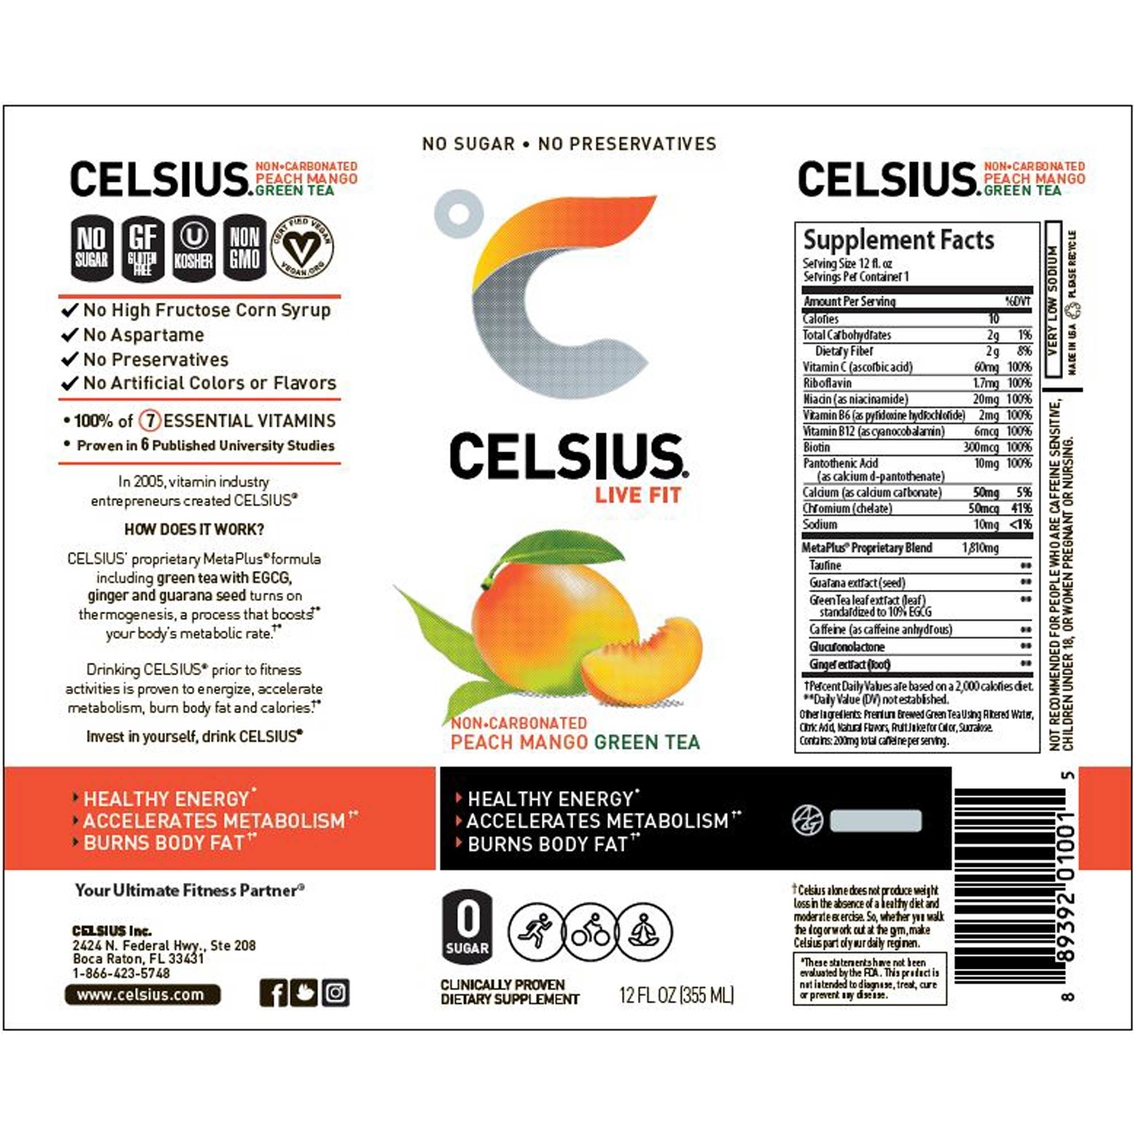 Celsius Sparkling Non Carbonated Raspberry Acai Green Tea 12 oz., 4 pk. - Image 2 of 2